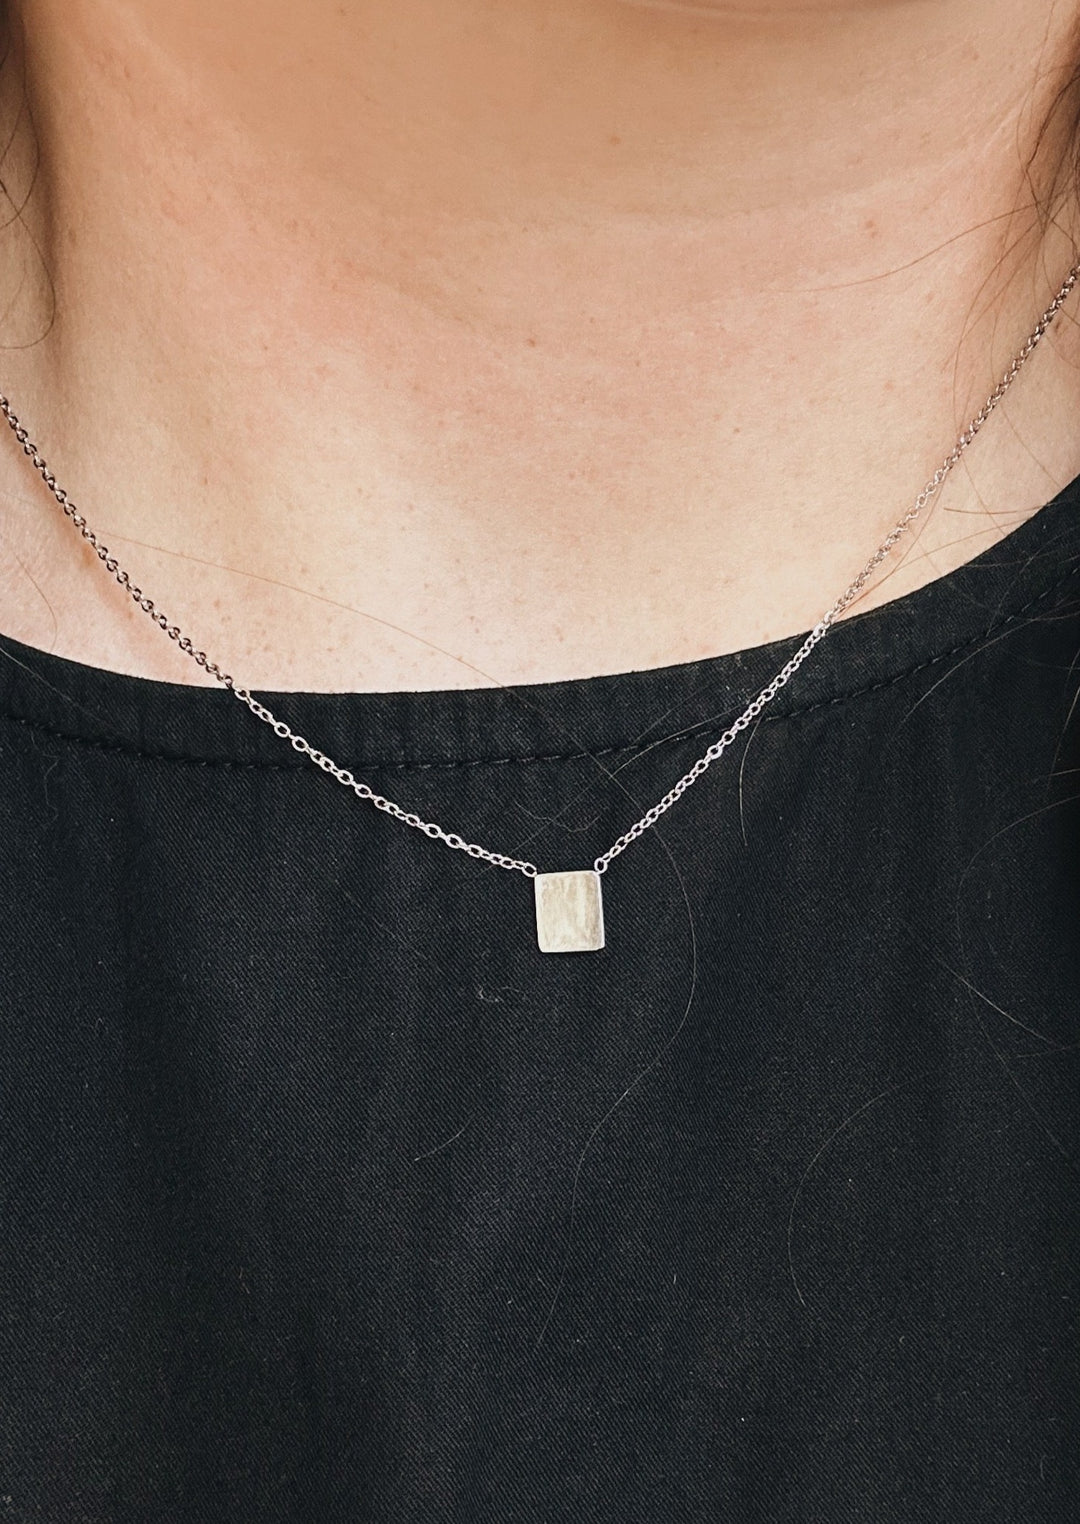 Tag Necklace - Silver